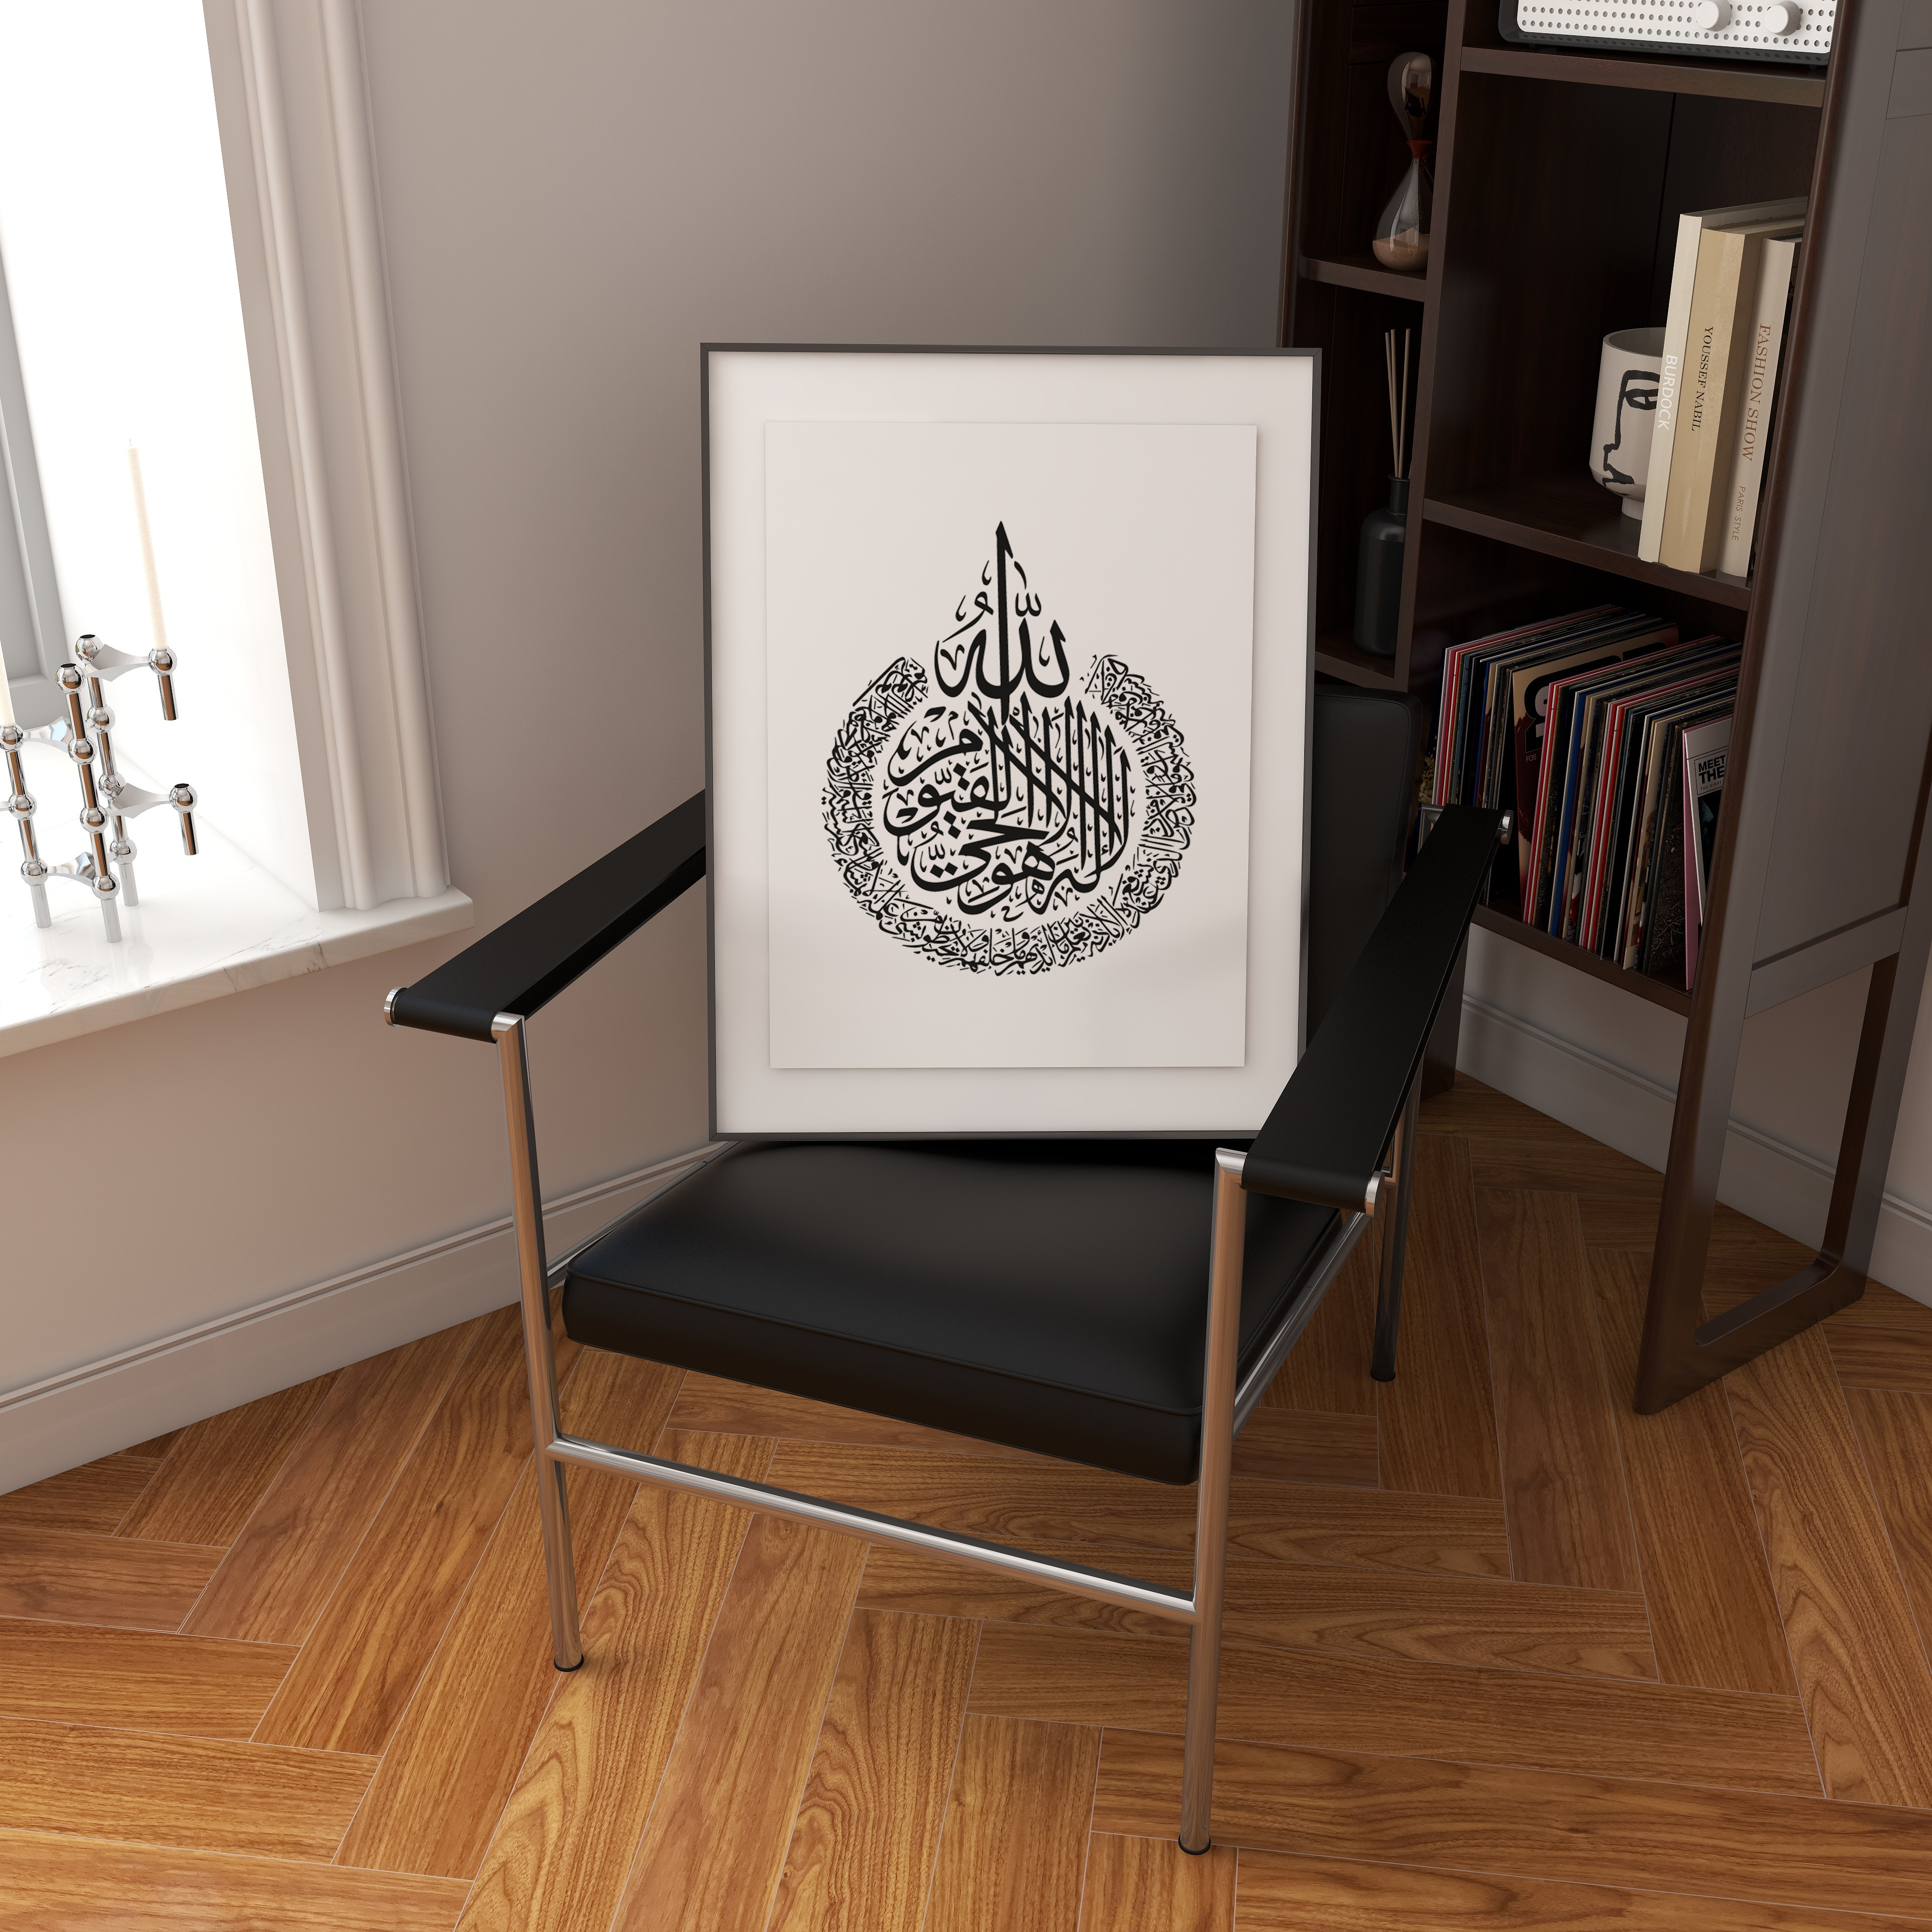 Ayatul Kursi Islamic Calligraphy - Islamic Wall Art Print | Home Decor | Islamic Gifts for Muslims